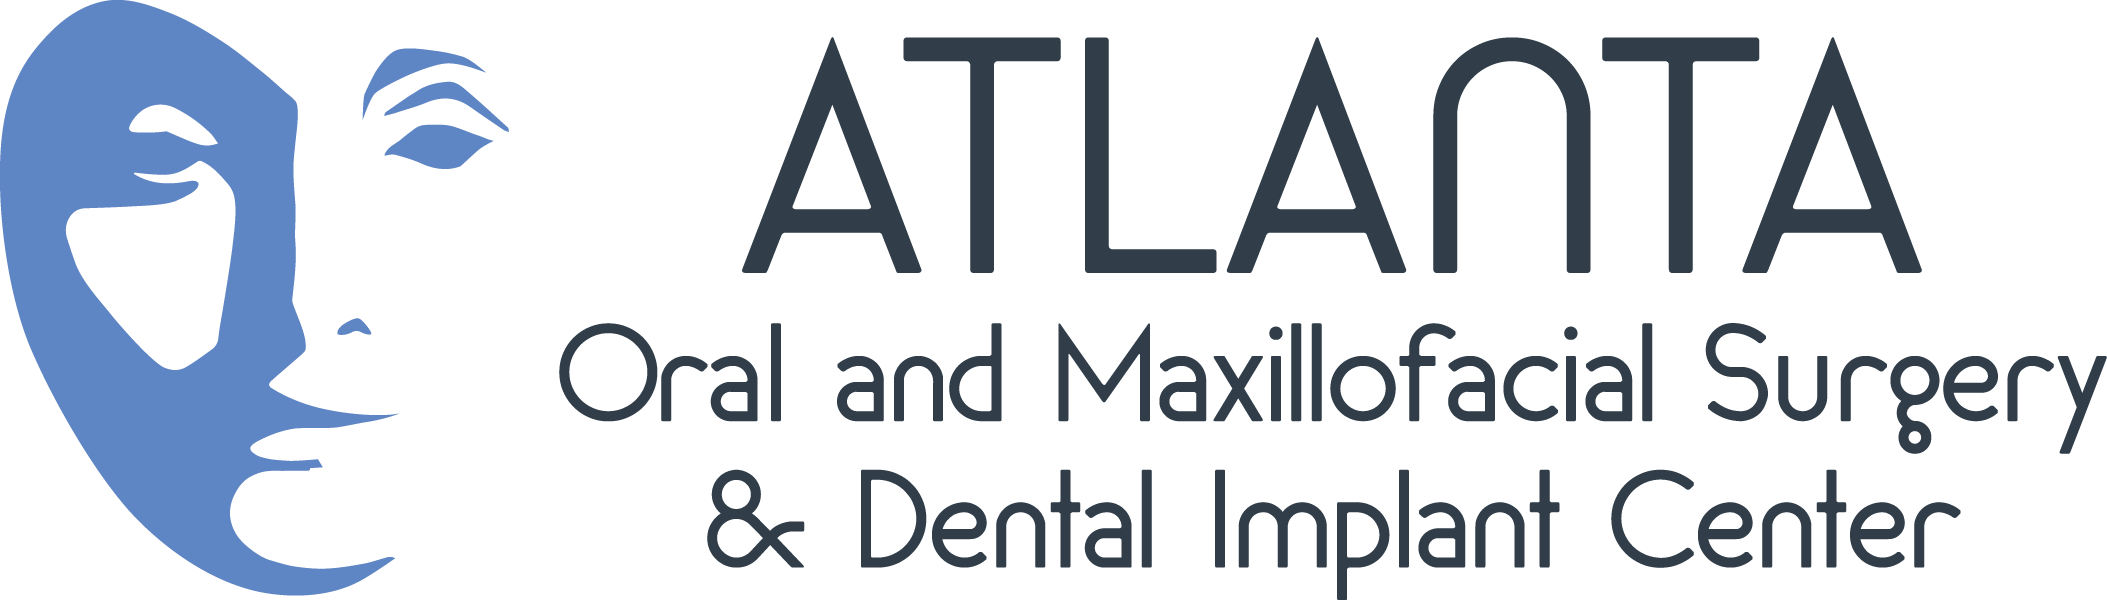 Link to Atlanta Oral & Maxillofacial Surgery and Dental Implant Center home page